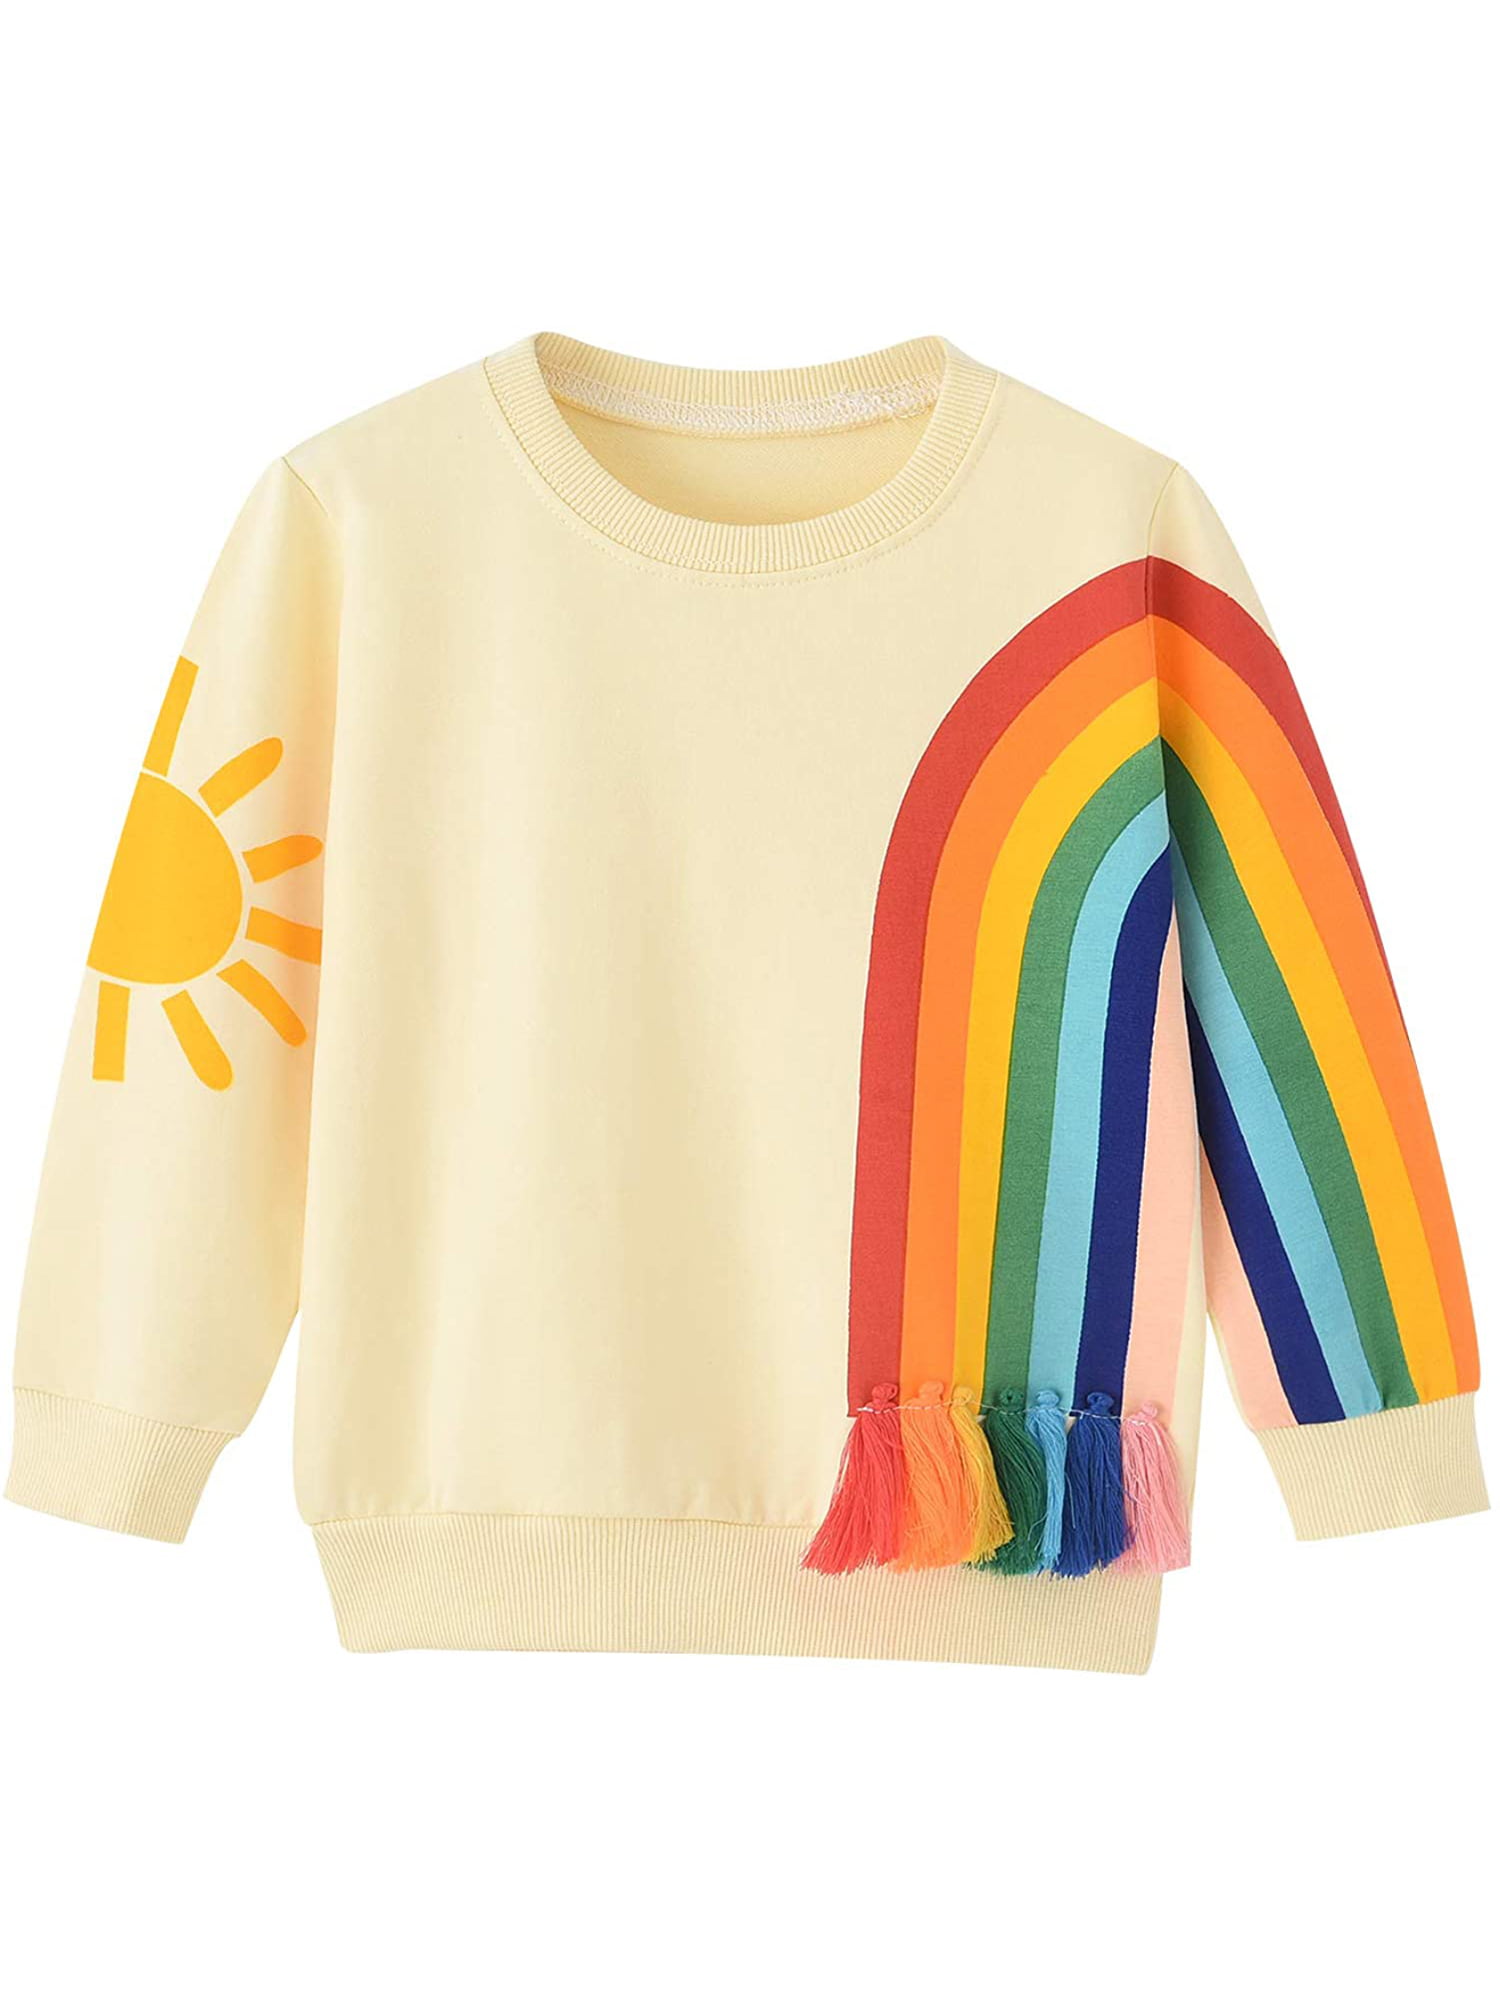 Unisex Baby Sun and Rainbow Sweatshirt Autumn Cotton Long Sleeve Shirt Top